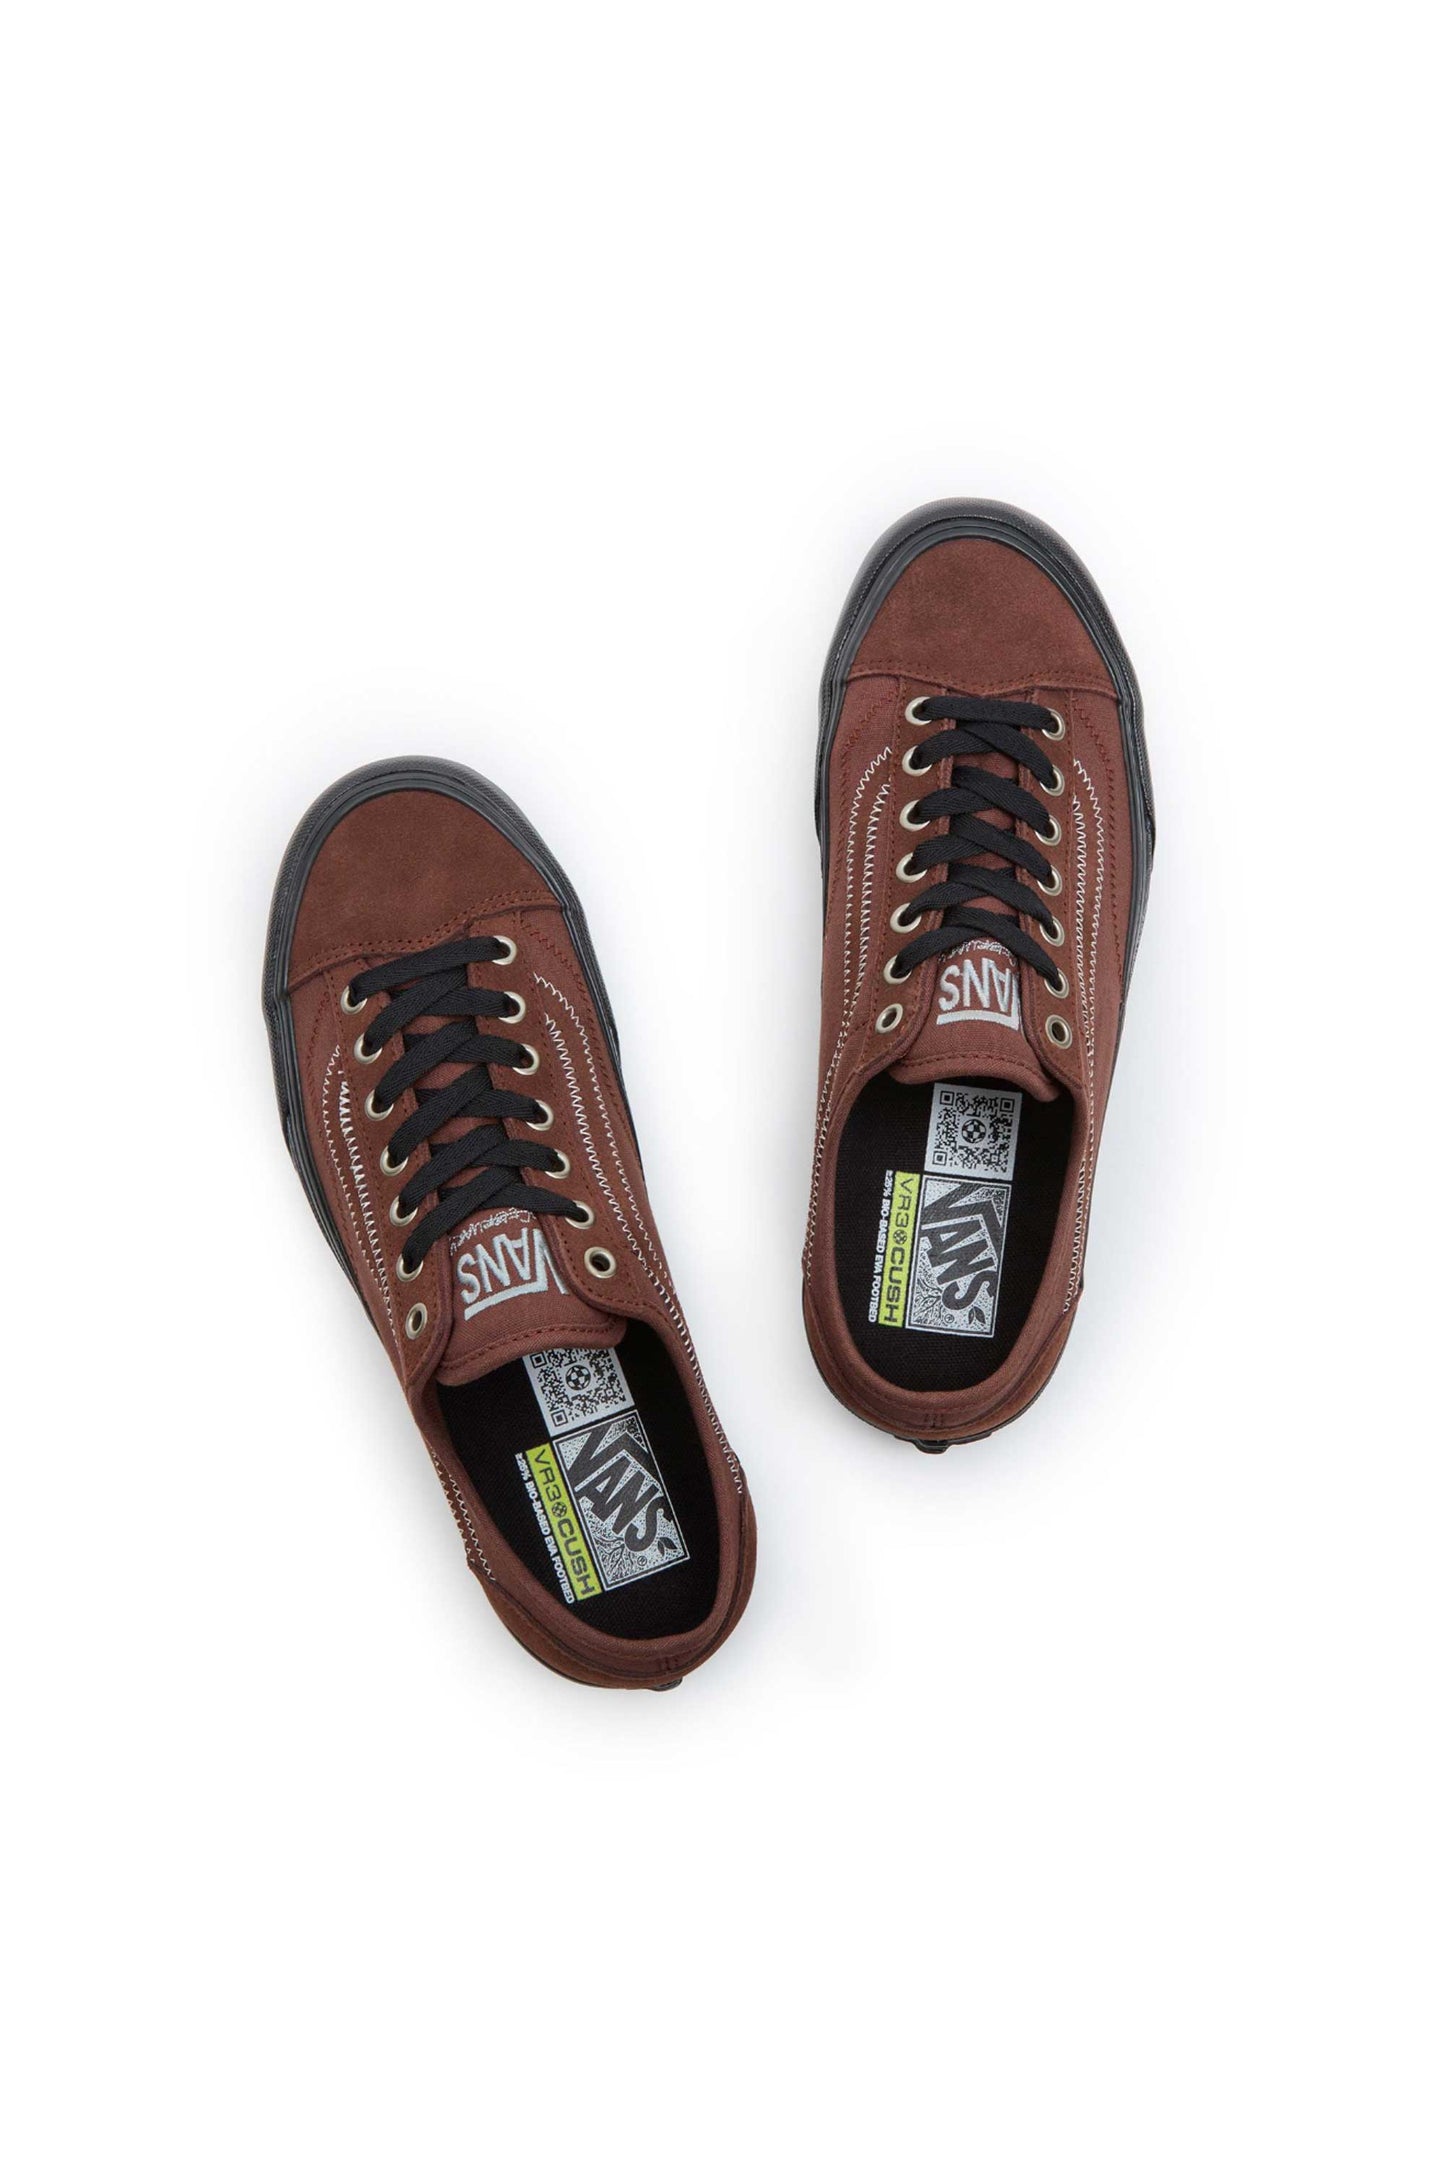 Pukas-Surf-Shop-Vans-footwear-mikey-february-style-36-decon-vr3-shoes-dark-brown